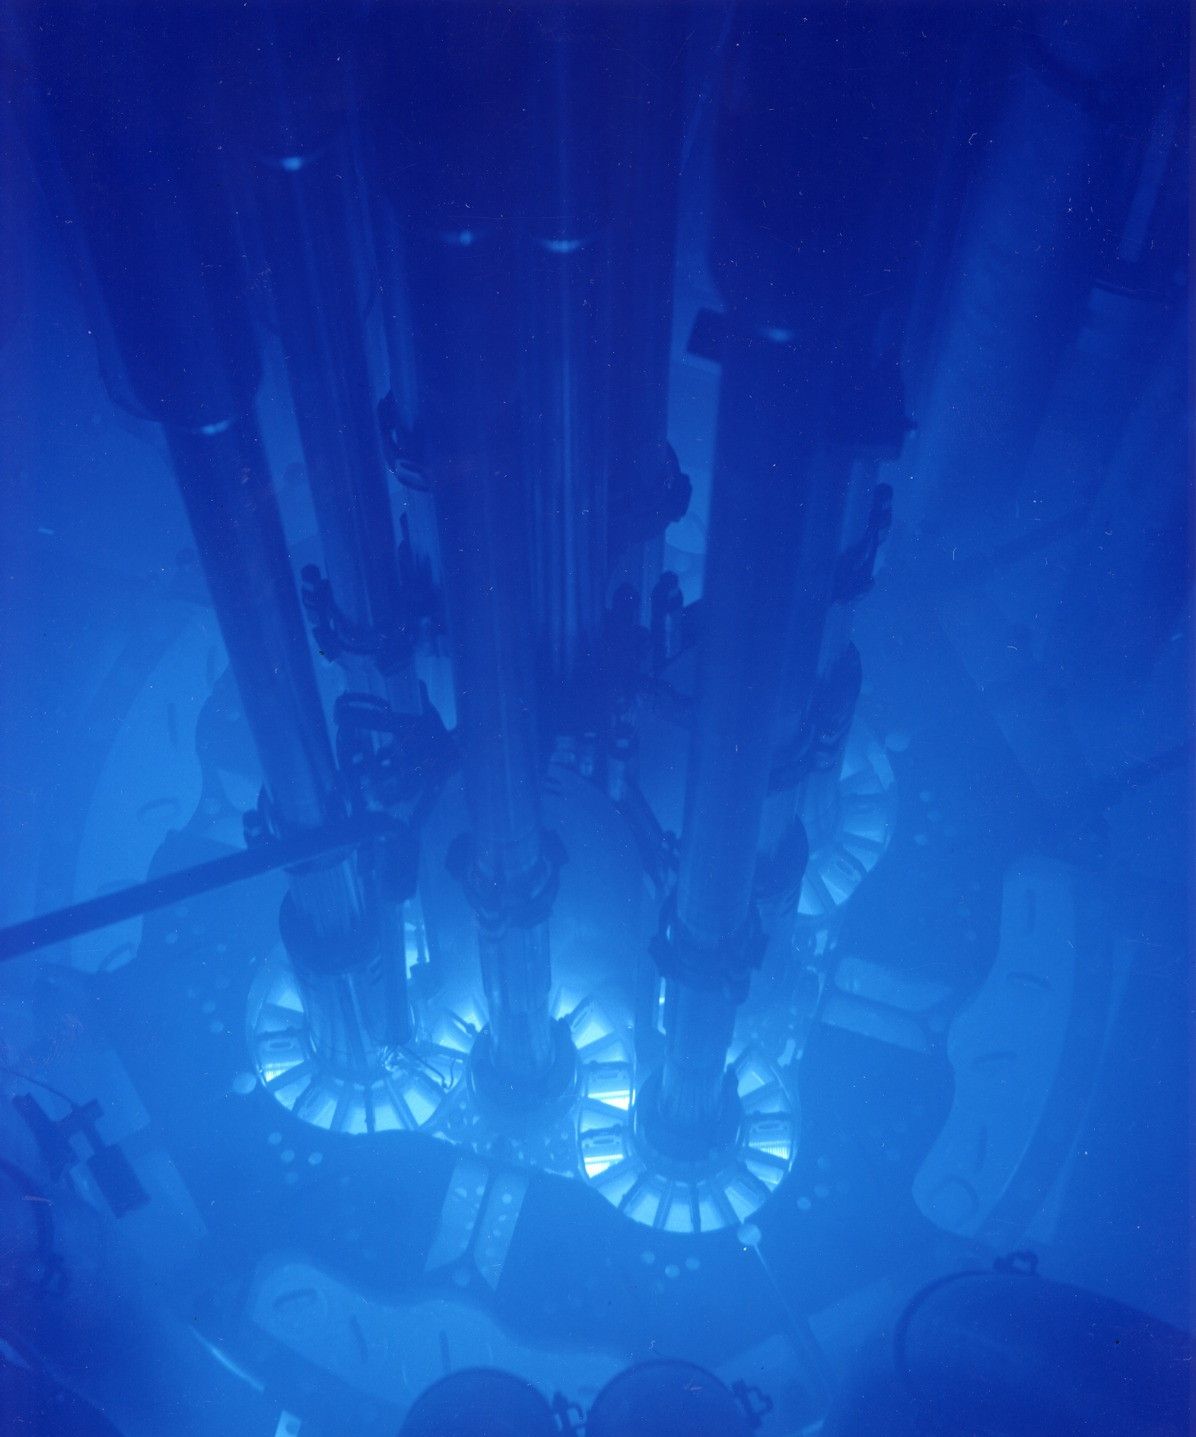 INL's Advanced Test Reactor